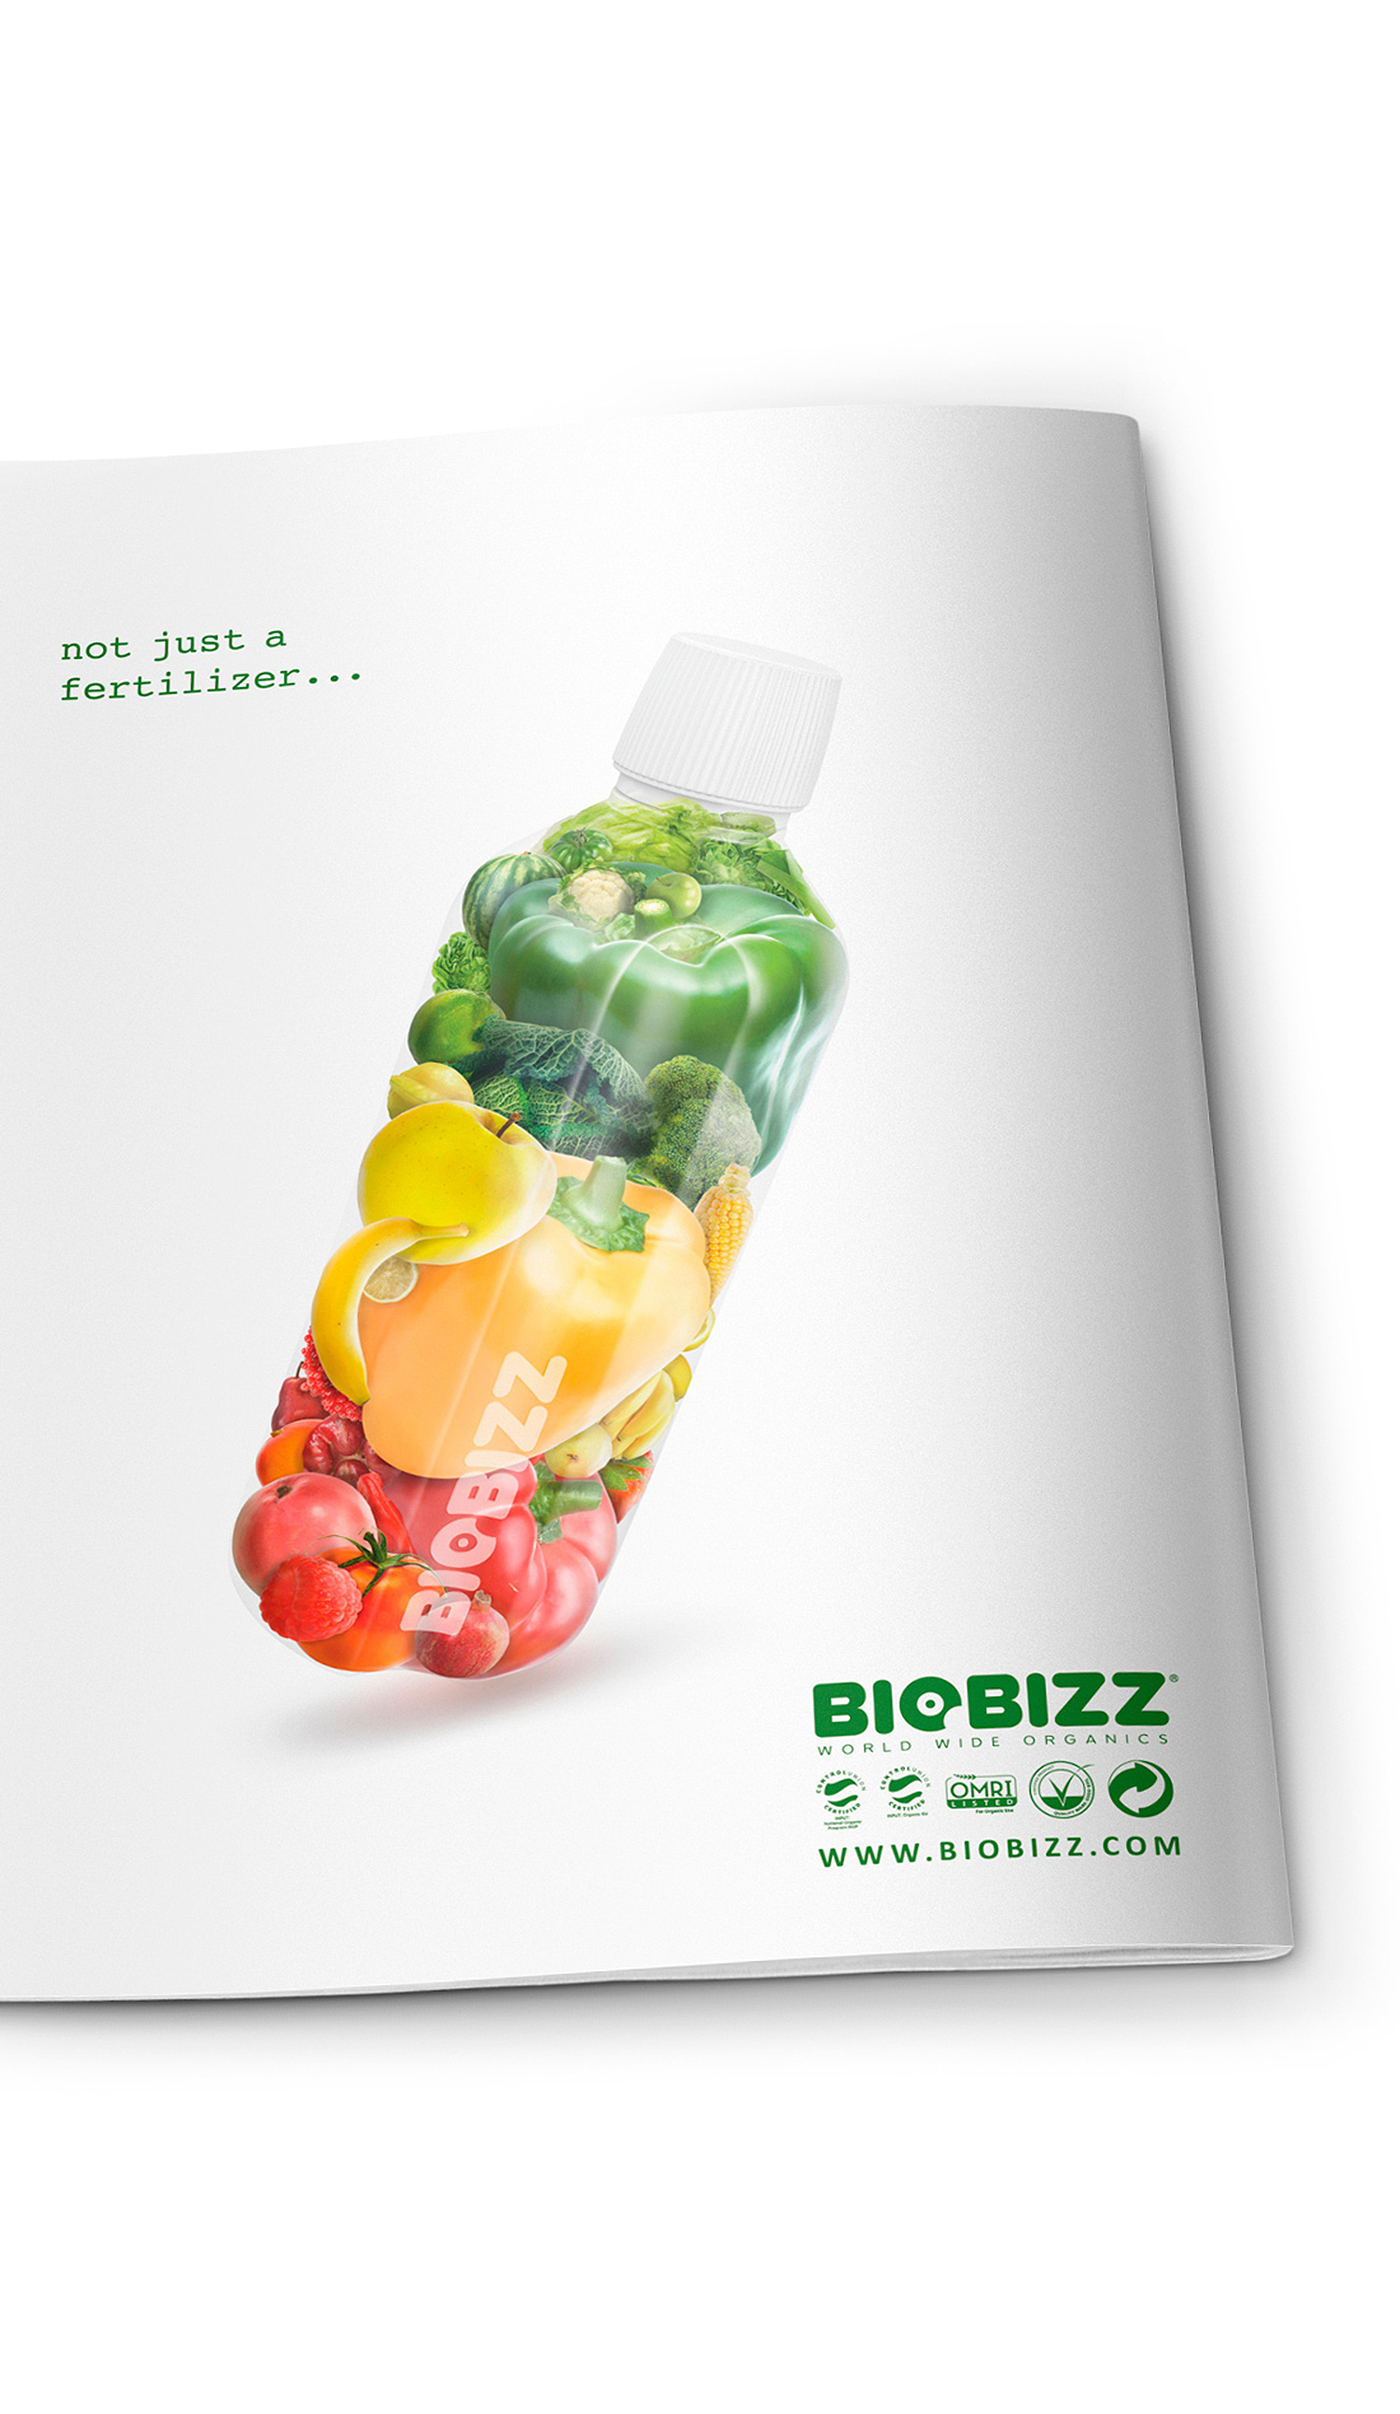 biobizz grow Photo Manipulation  Fertilizer biological visualization Key Visuals organic photo illustration  photoshop wacom 3ds max 3d render campaign Sustainable